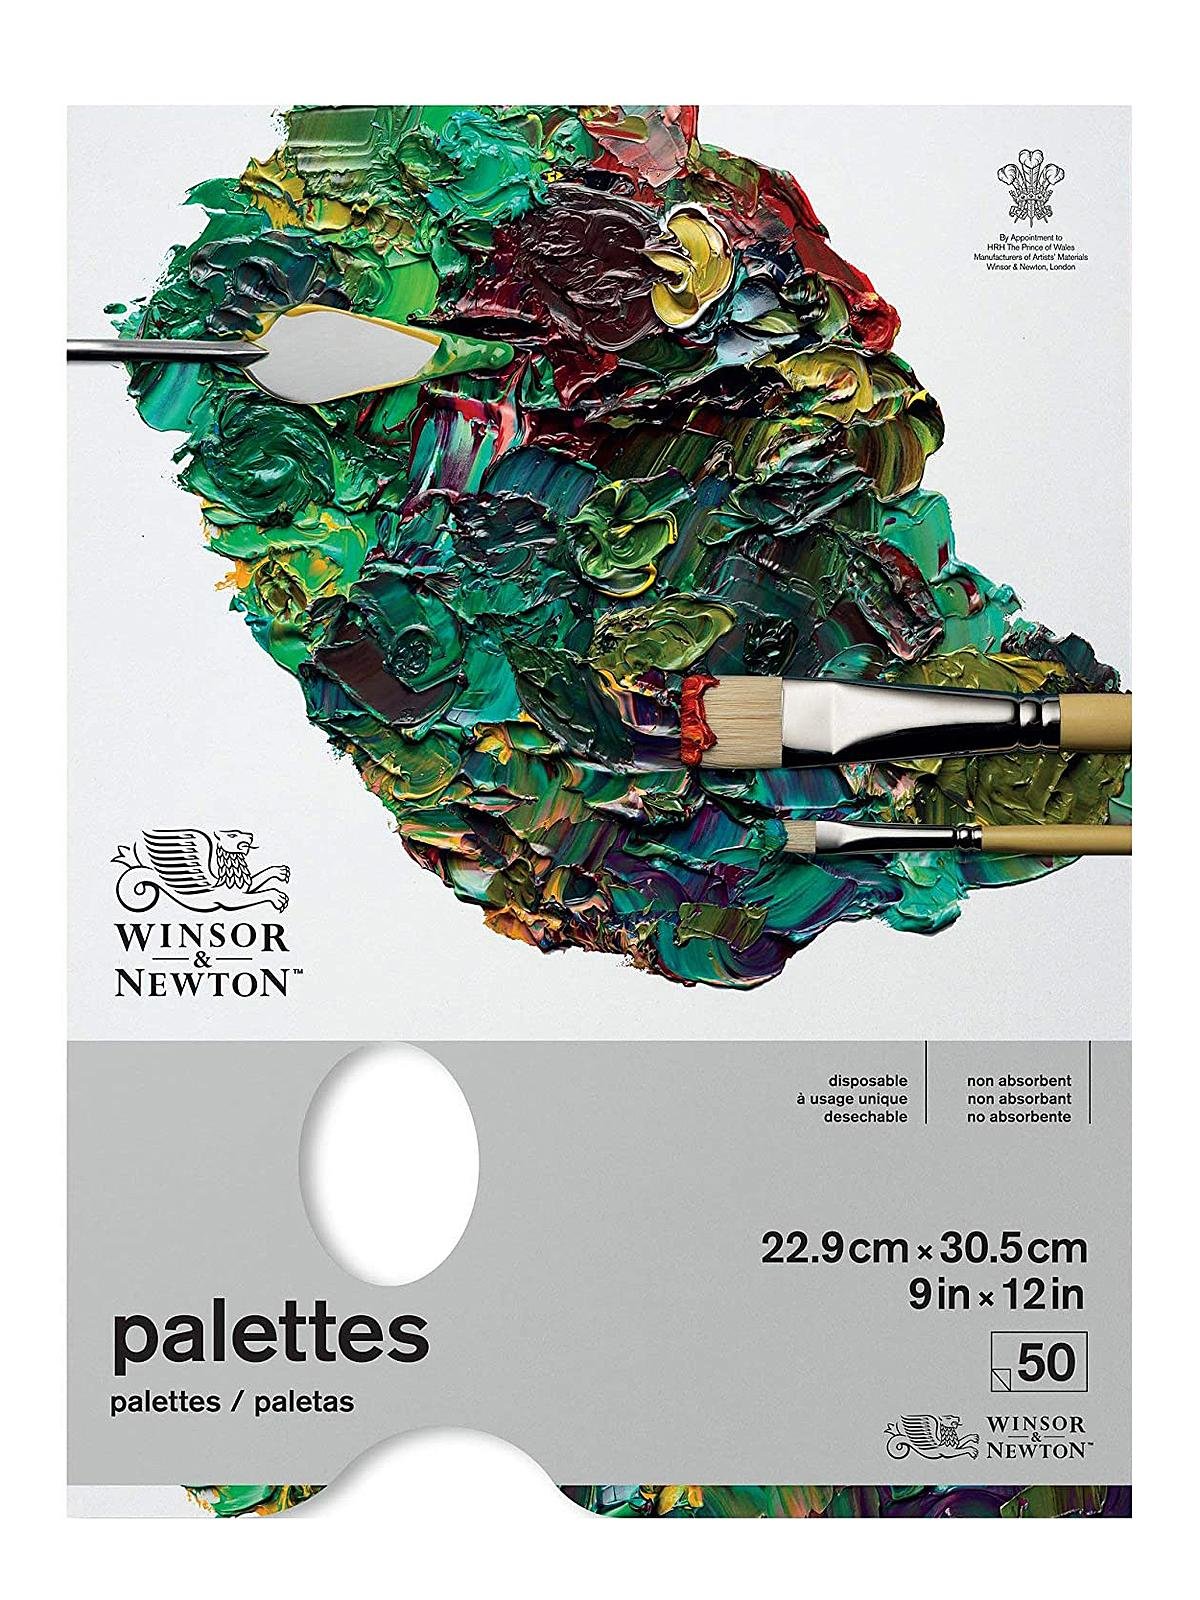 Winsor & Newton Tear-Off Palette Pad - 9 inch x 12 inch, 50 Sheets